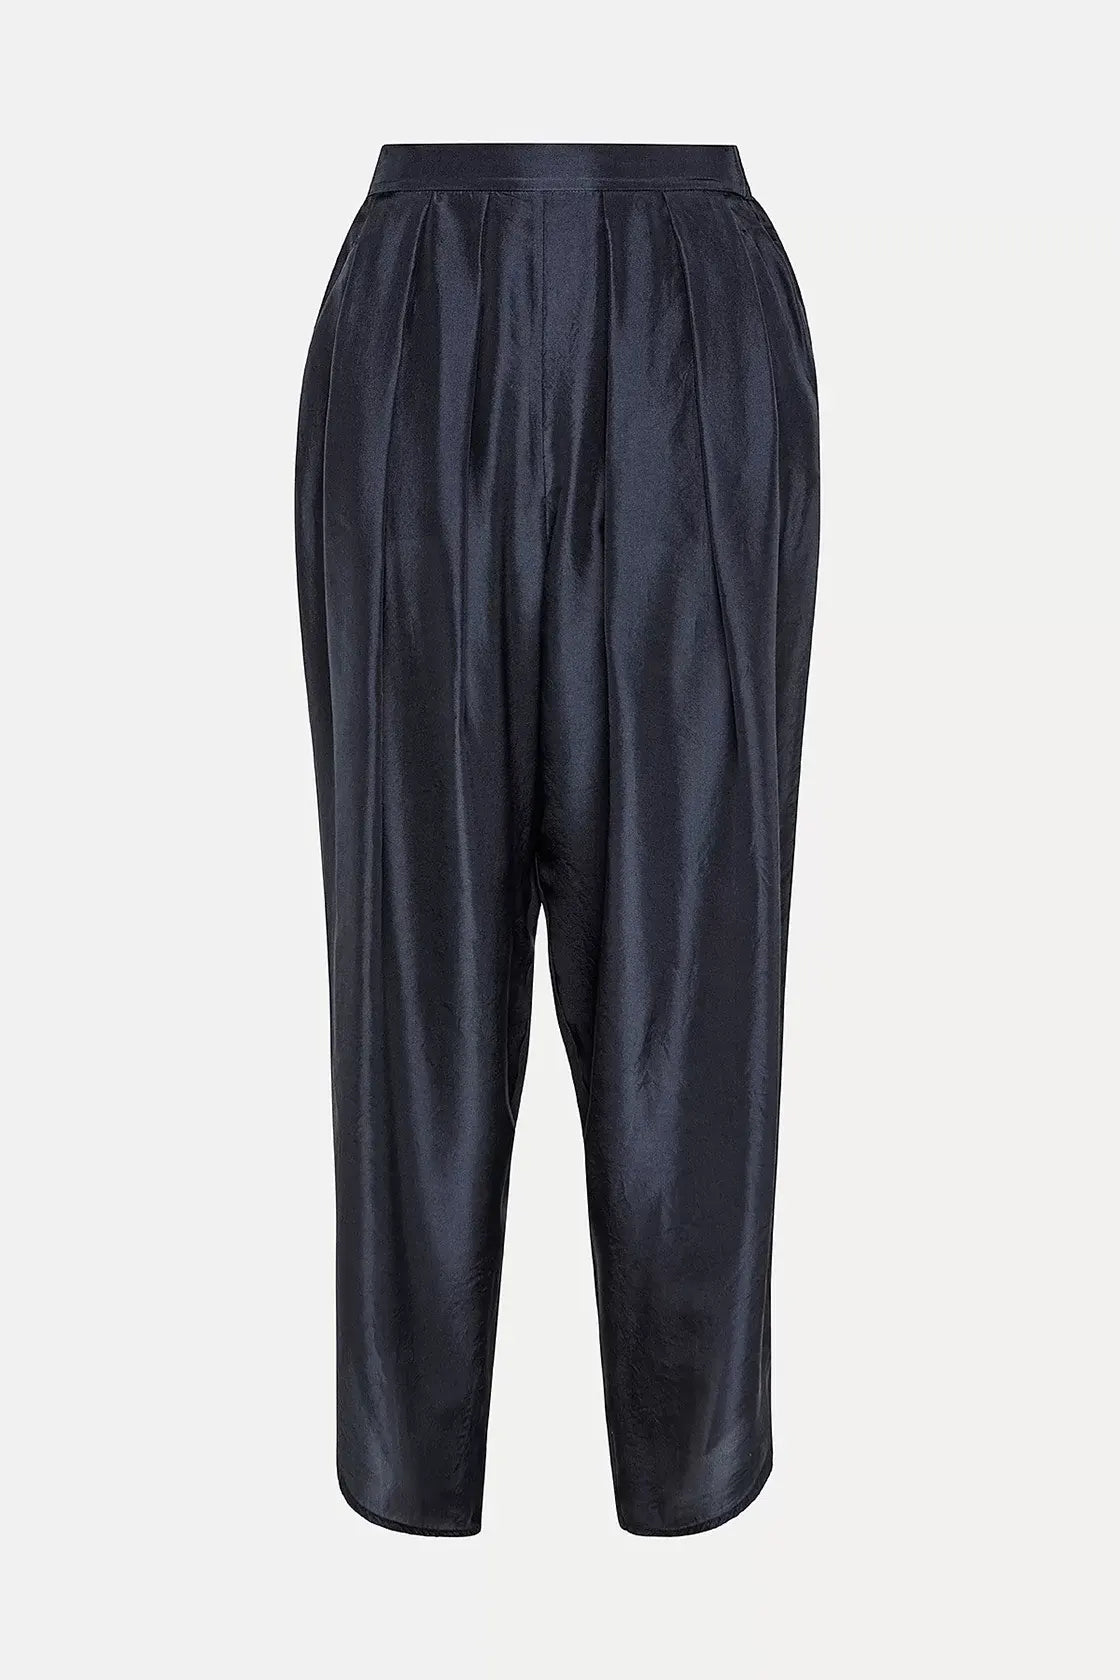 Silk high waist pants, black